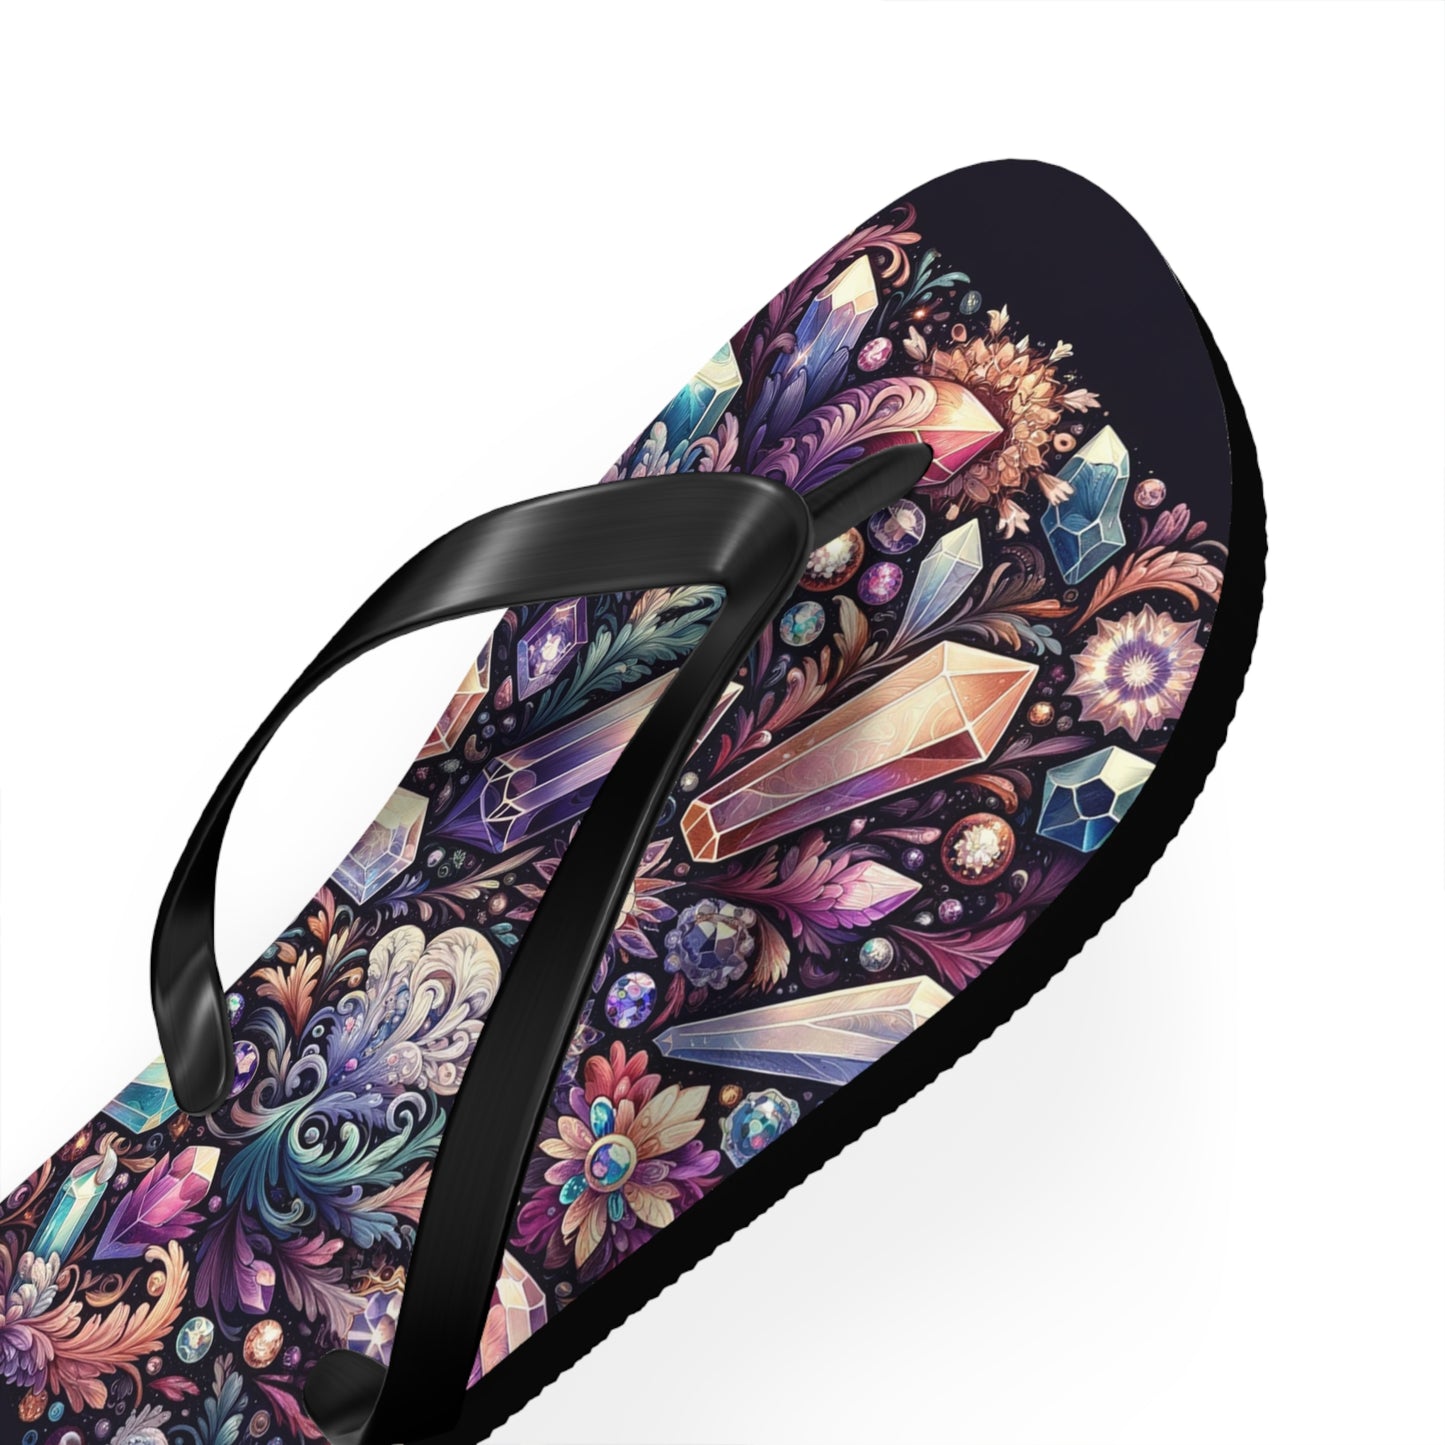 Enchanted Crystals Gemstone Flip Flops - Mystical and Elegant Summer Footwear